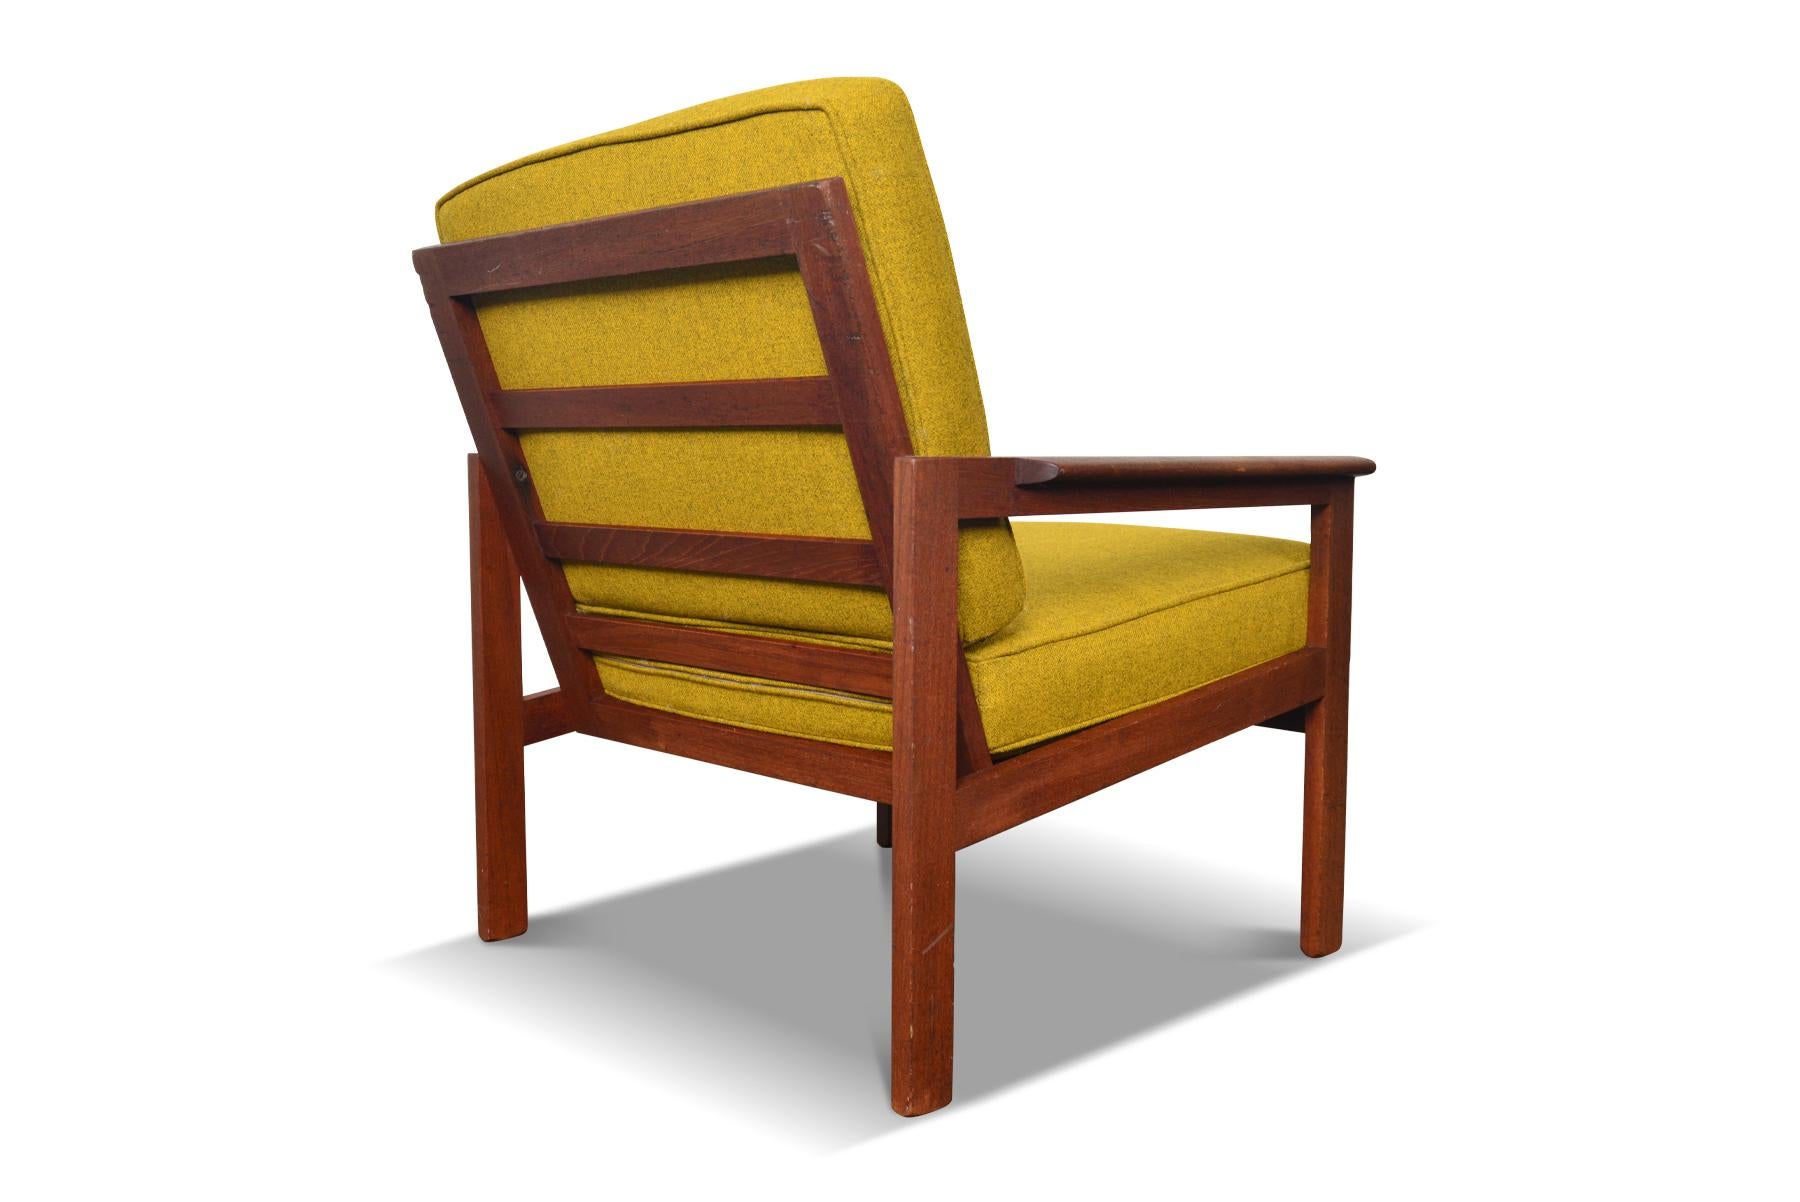 Oiled Illum Wikkelsø Capella Lounge Chair in Teak, Produced by N. Eilersen